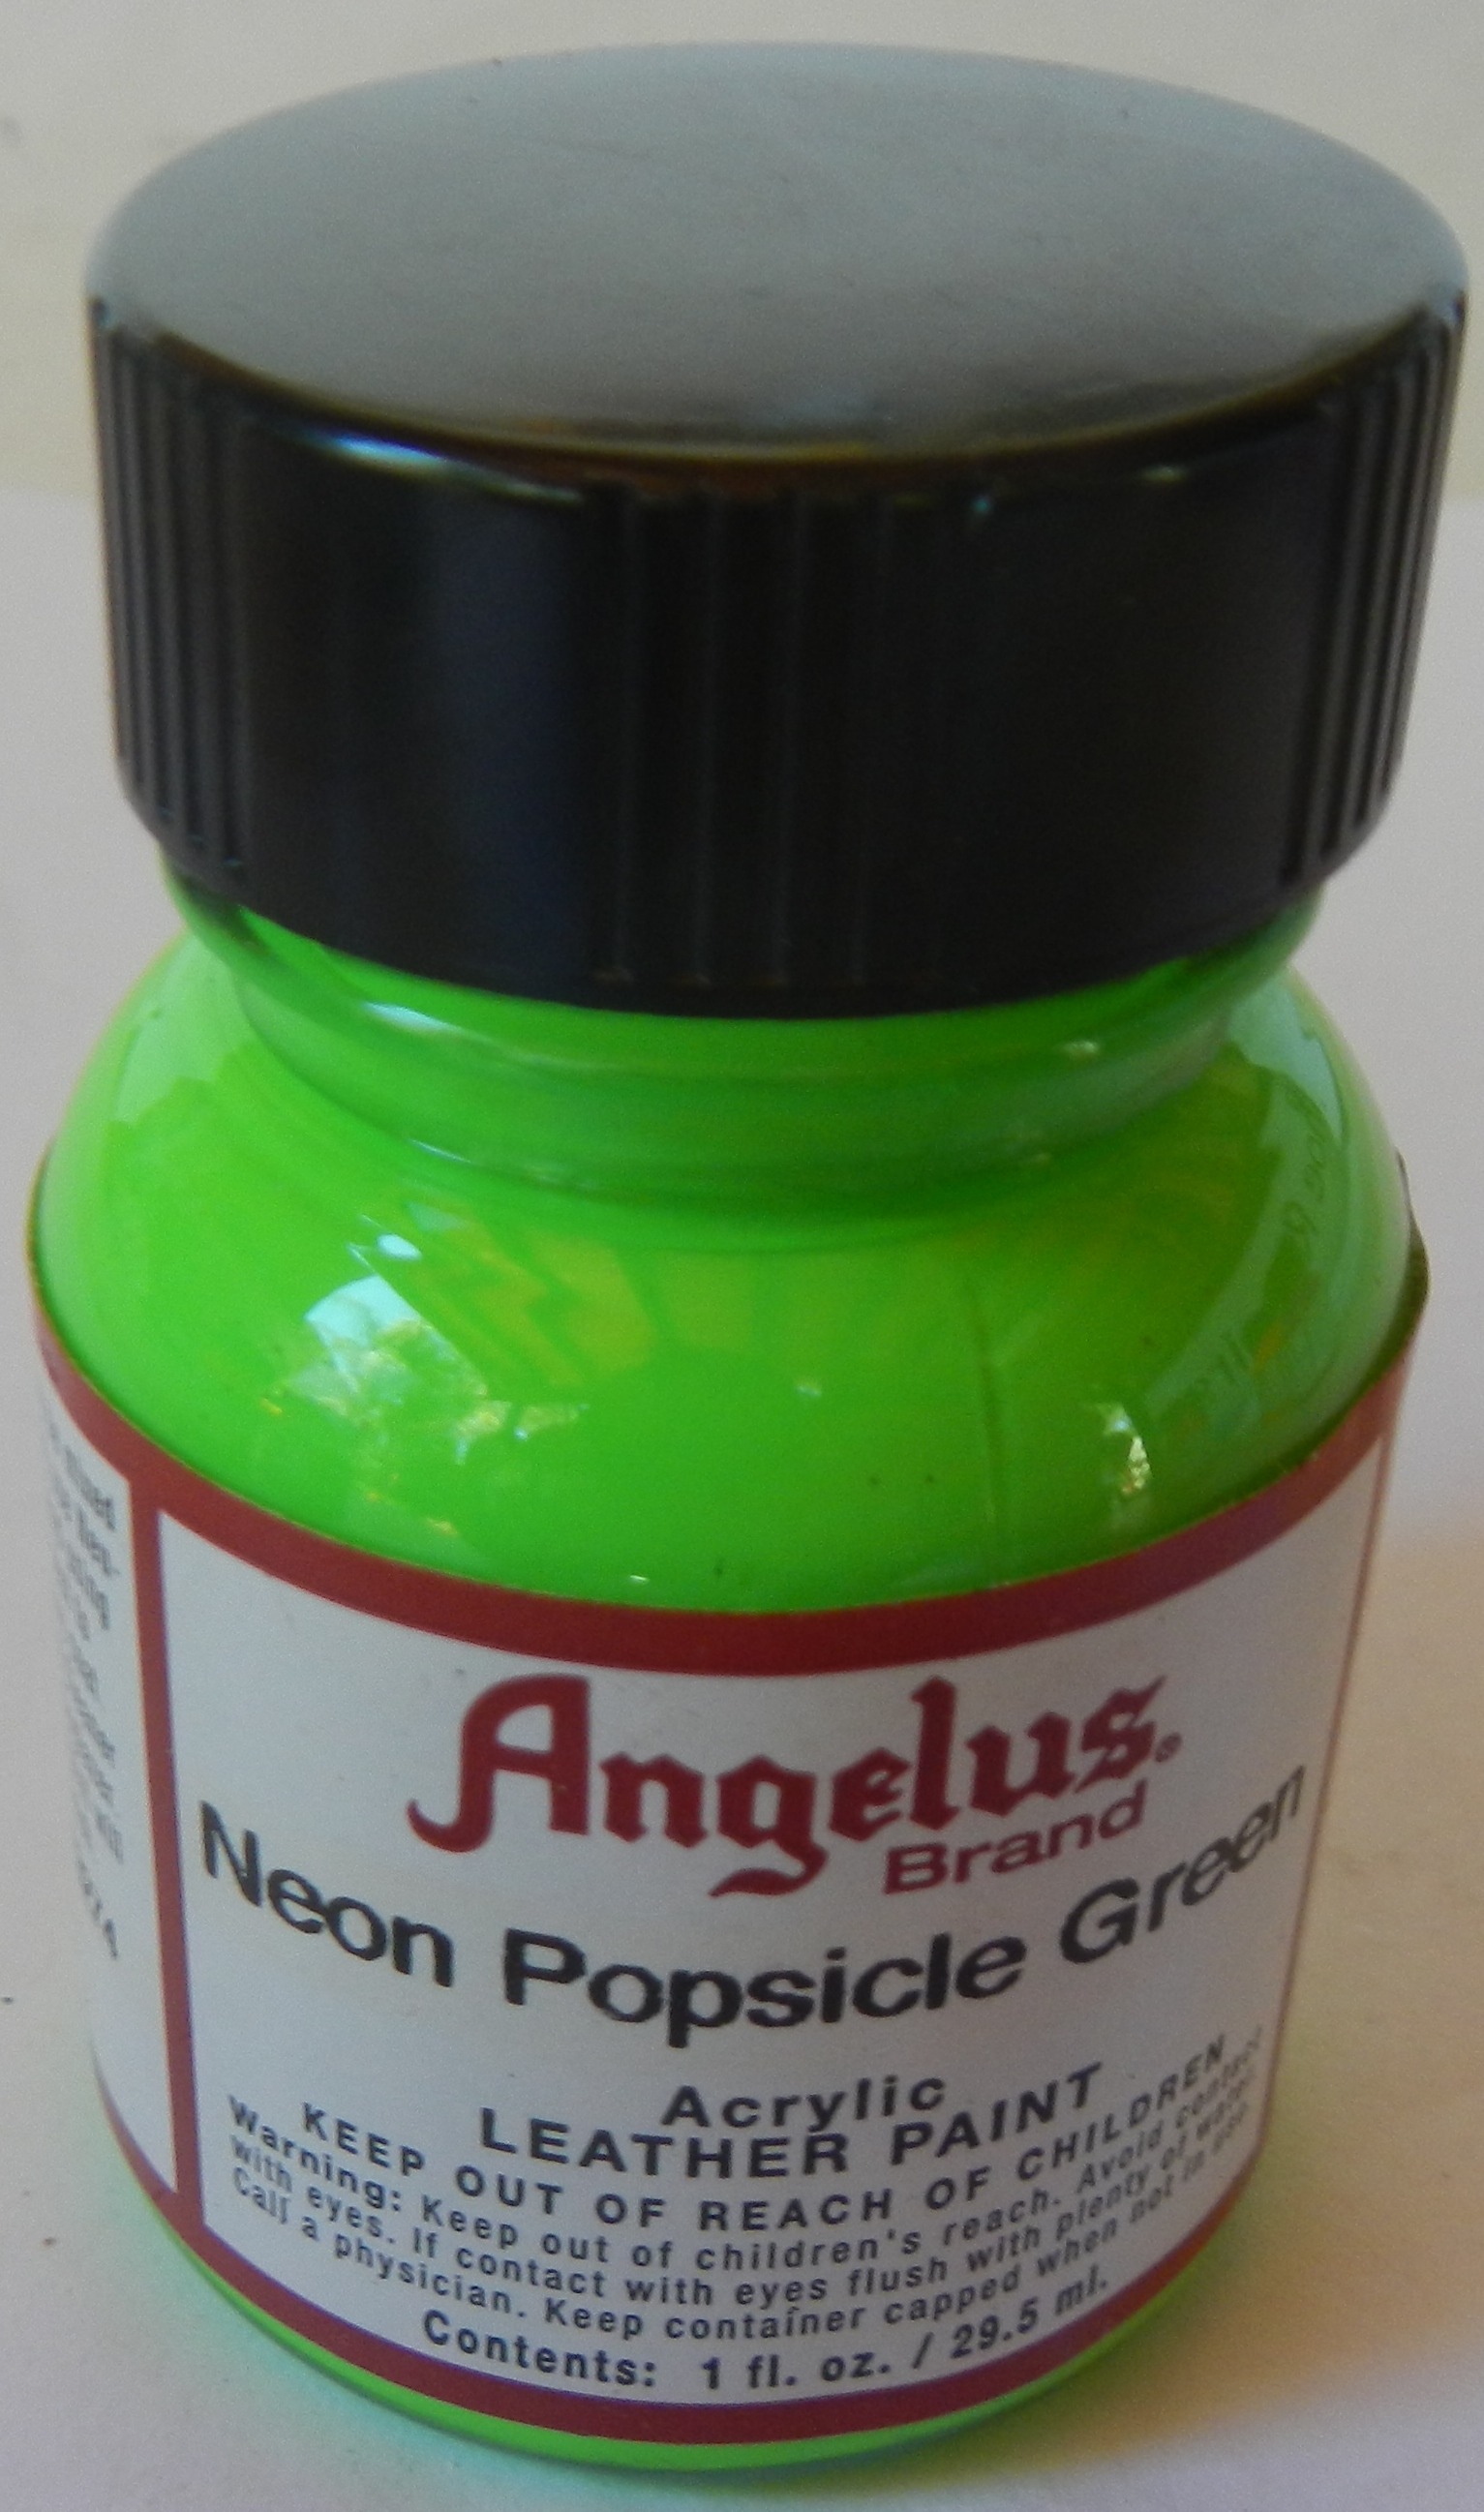 Angelus Neon Popsical Green